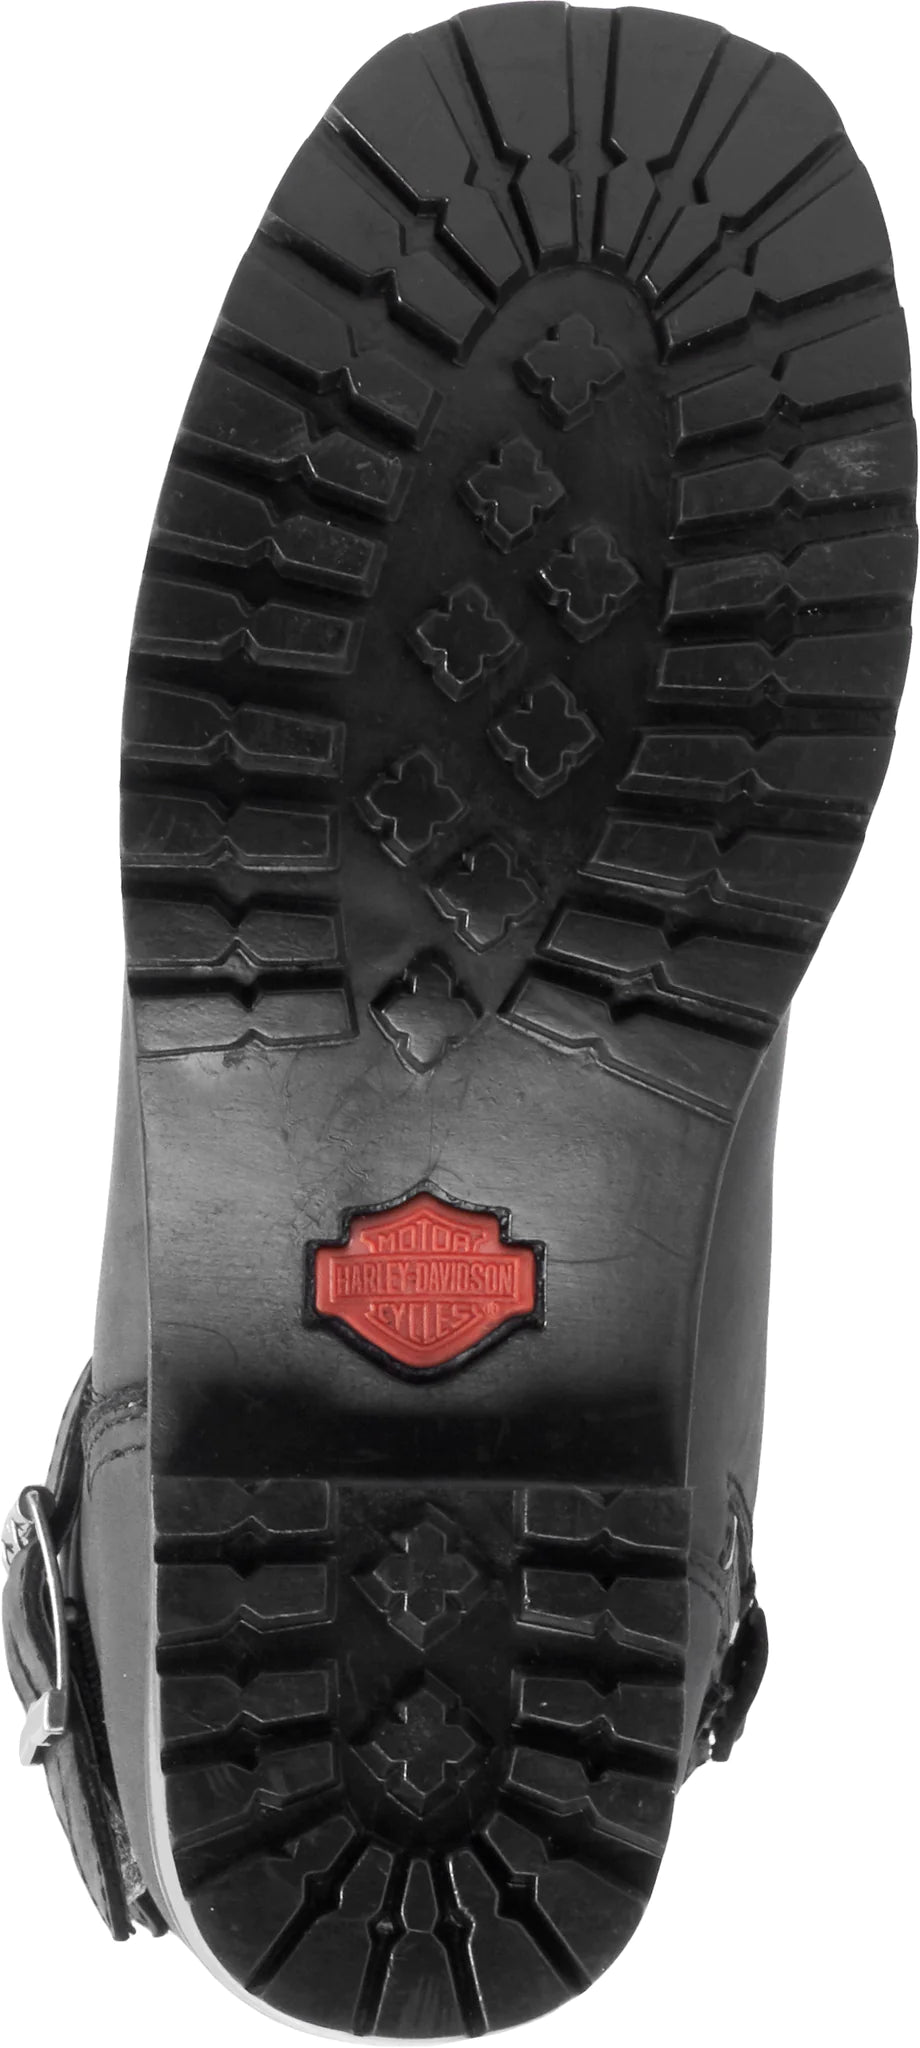 Harley-Davidson Women's Archer Steel Toe Boot